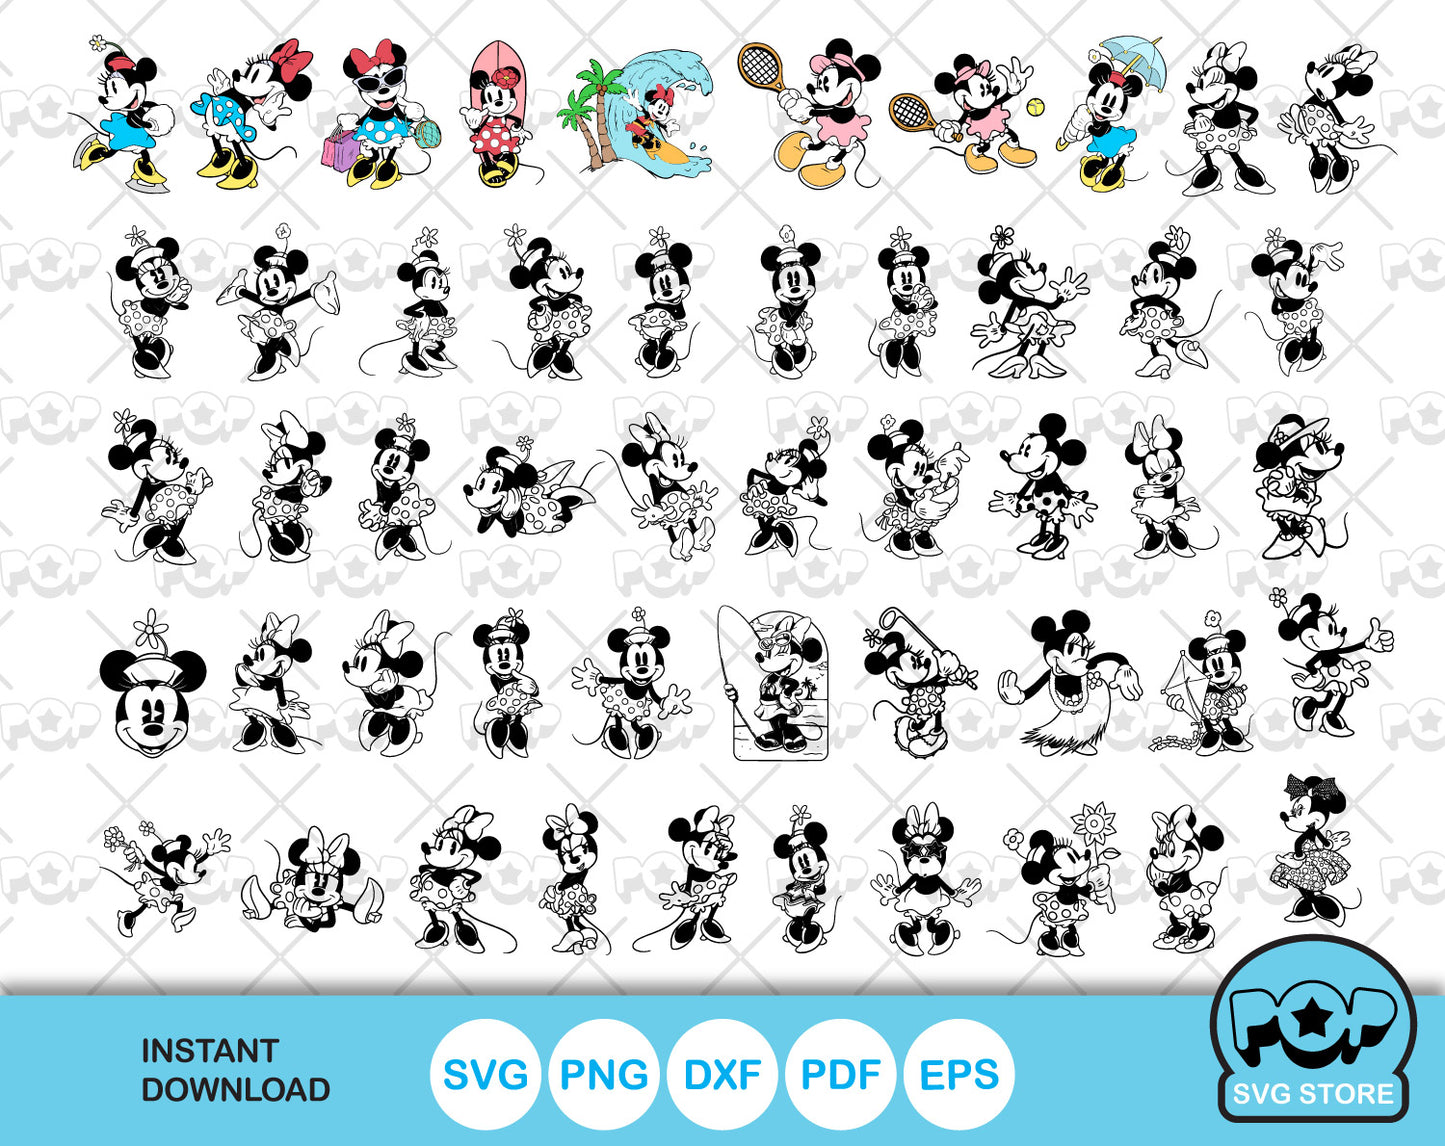 Classic Minnie Mouse BIG BUNDLE 500 files, Minnie svg cut files for Cricut / Silhouette, Minnie Mouse png